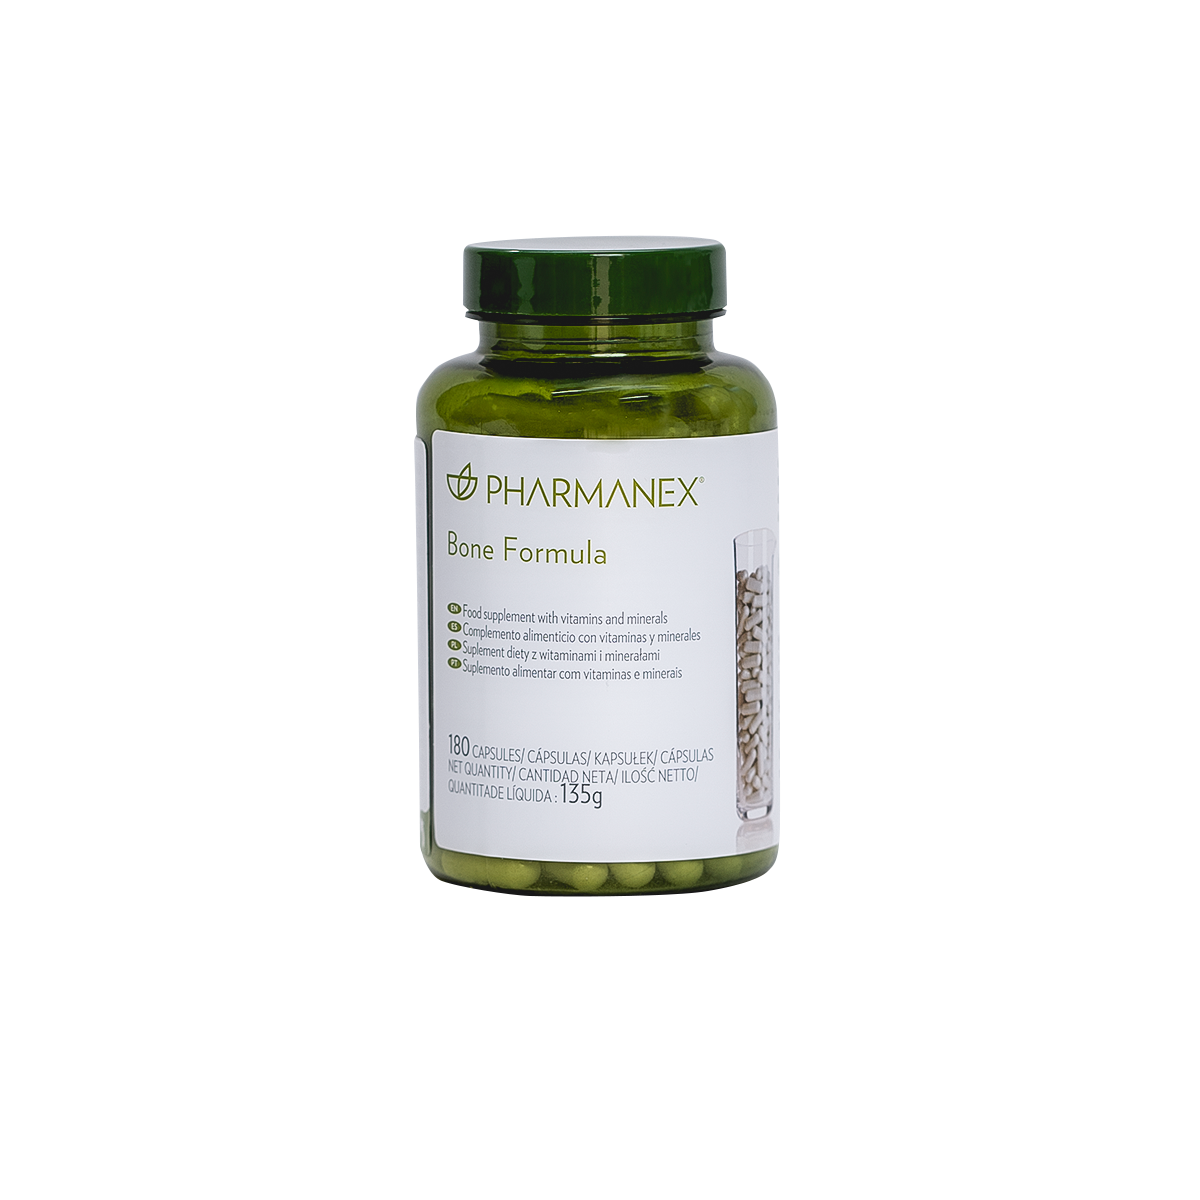 Nu Skin Pharmanex Bone Formula - Health supplement